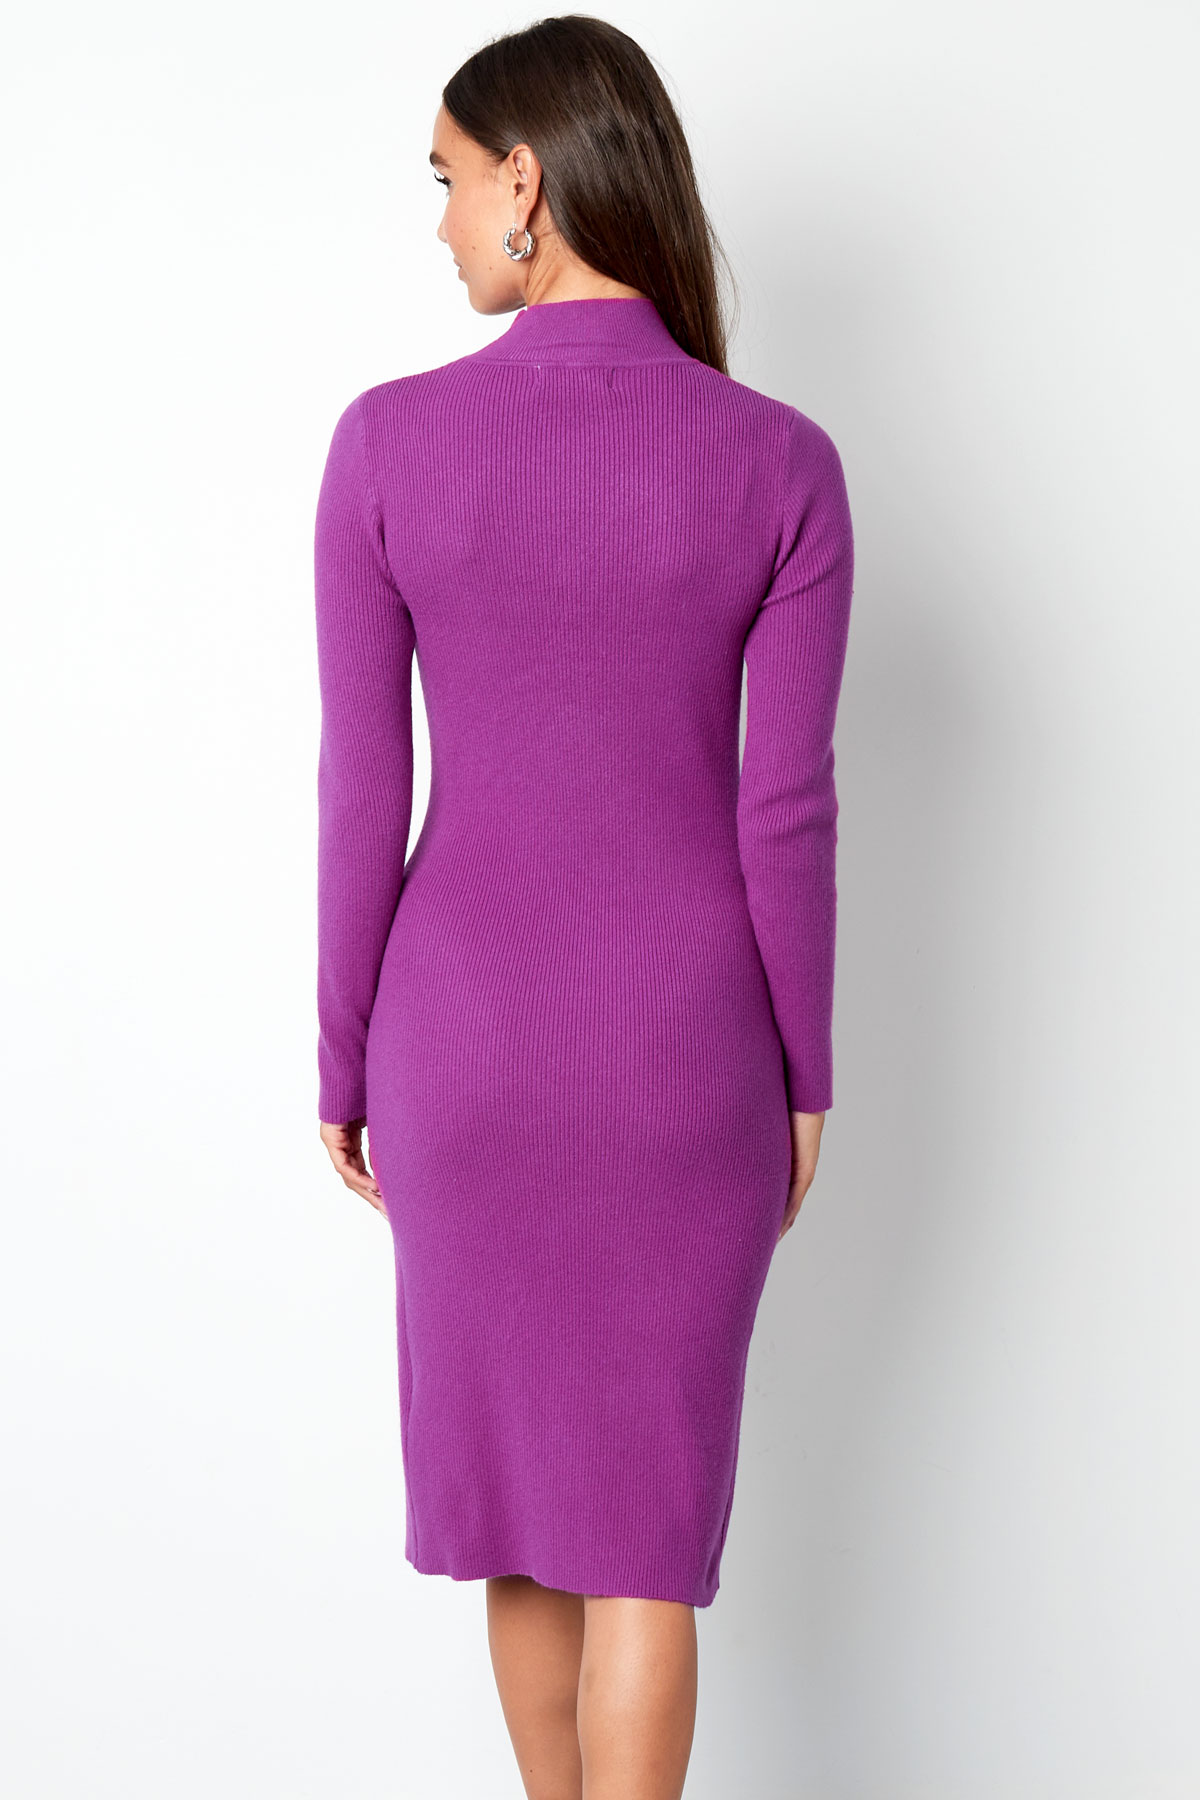 Midi dress with slit - purple Picture12